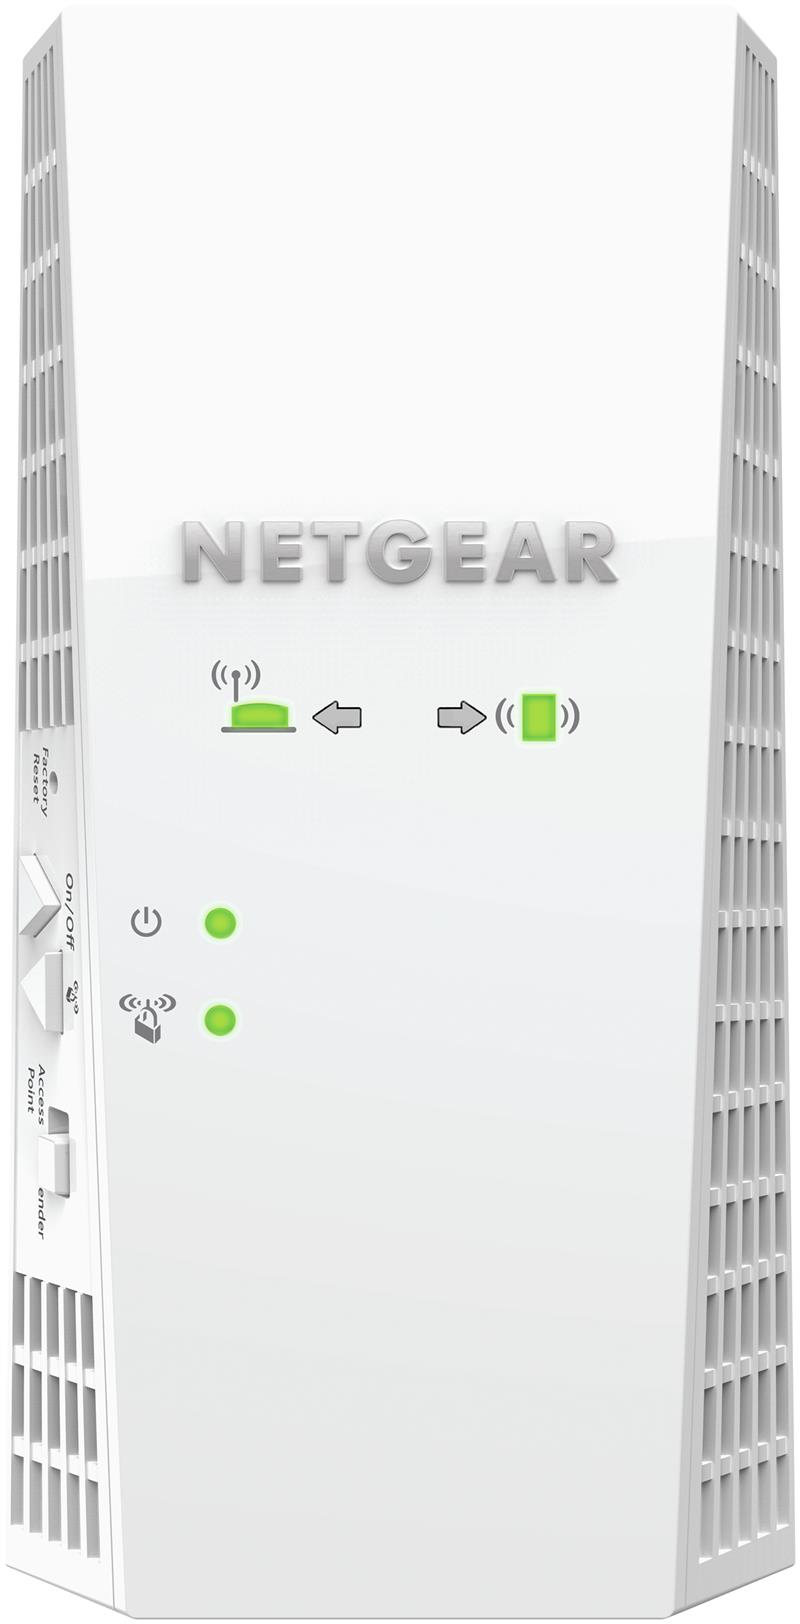 Netgear Nighthawk EX7300 X4 AC2200, Dual-Band WiFi Range Extender - 1 Gigabit Ethernet poort